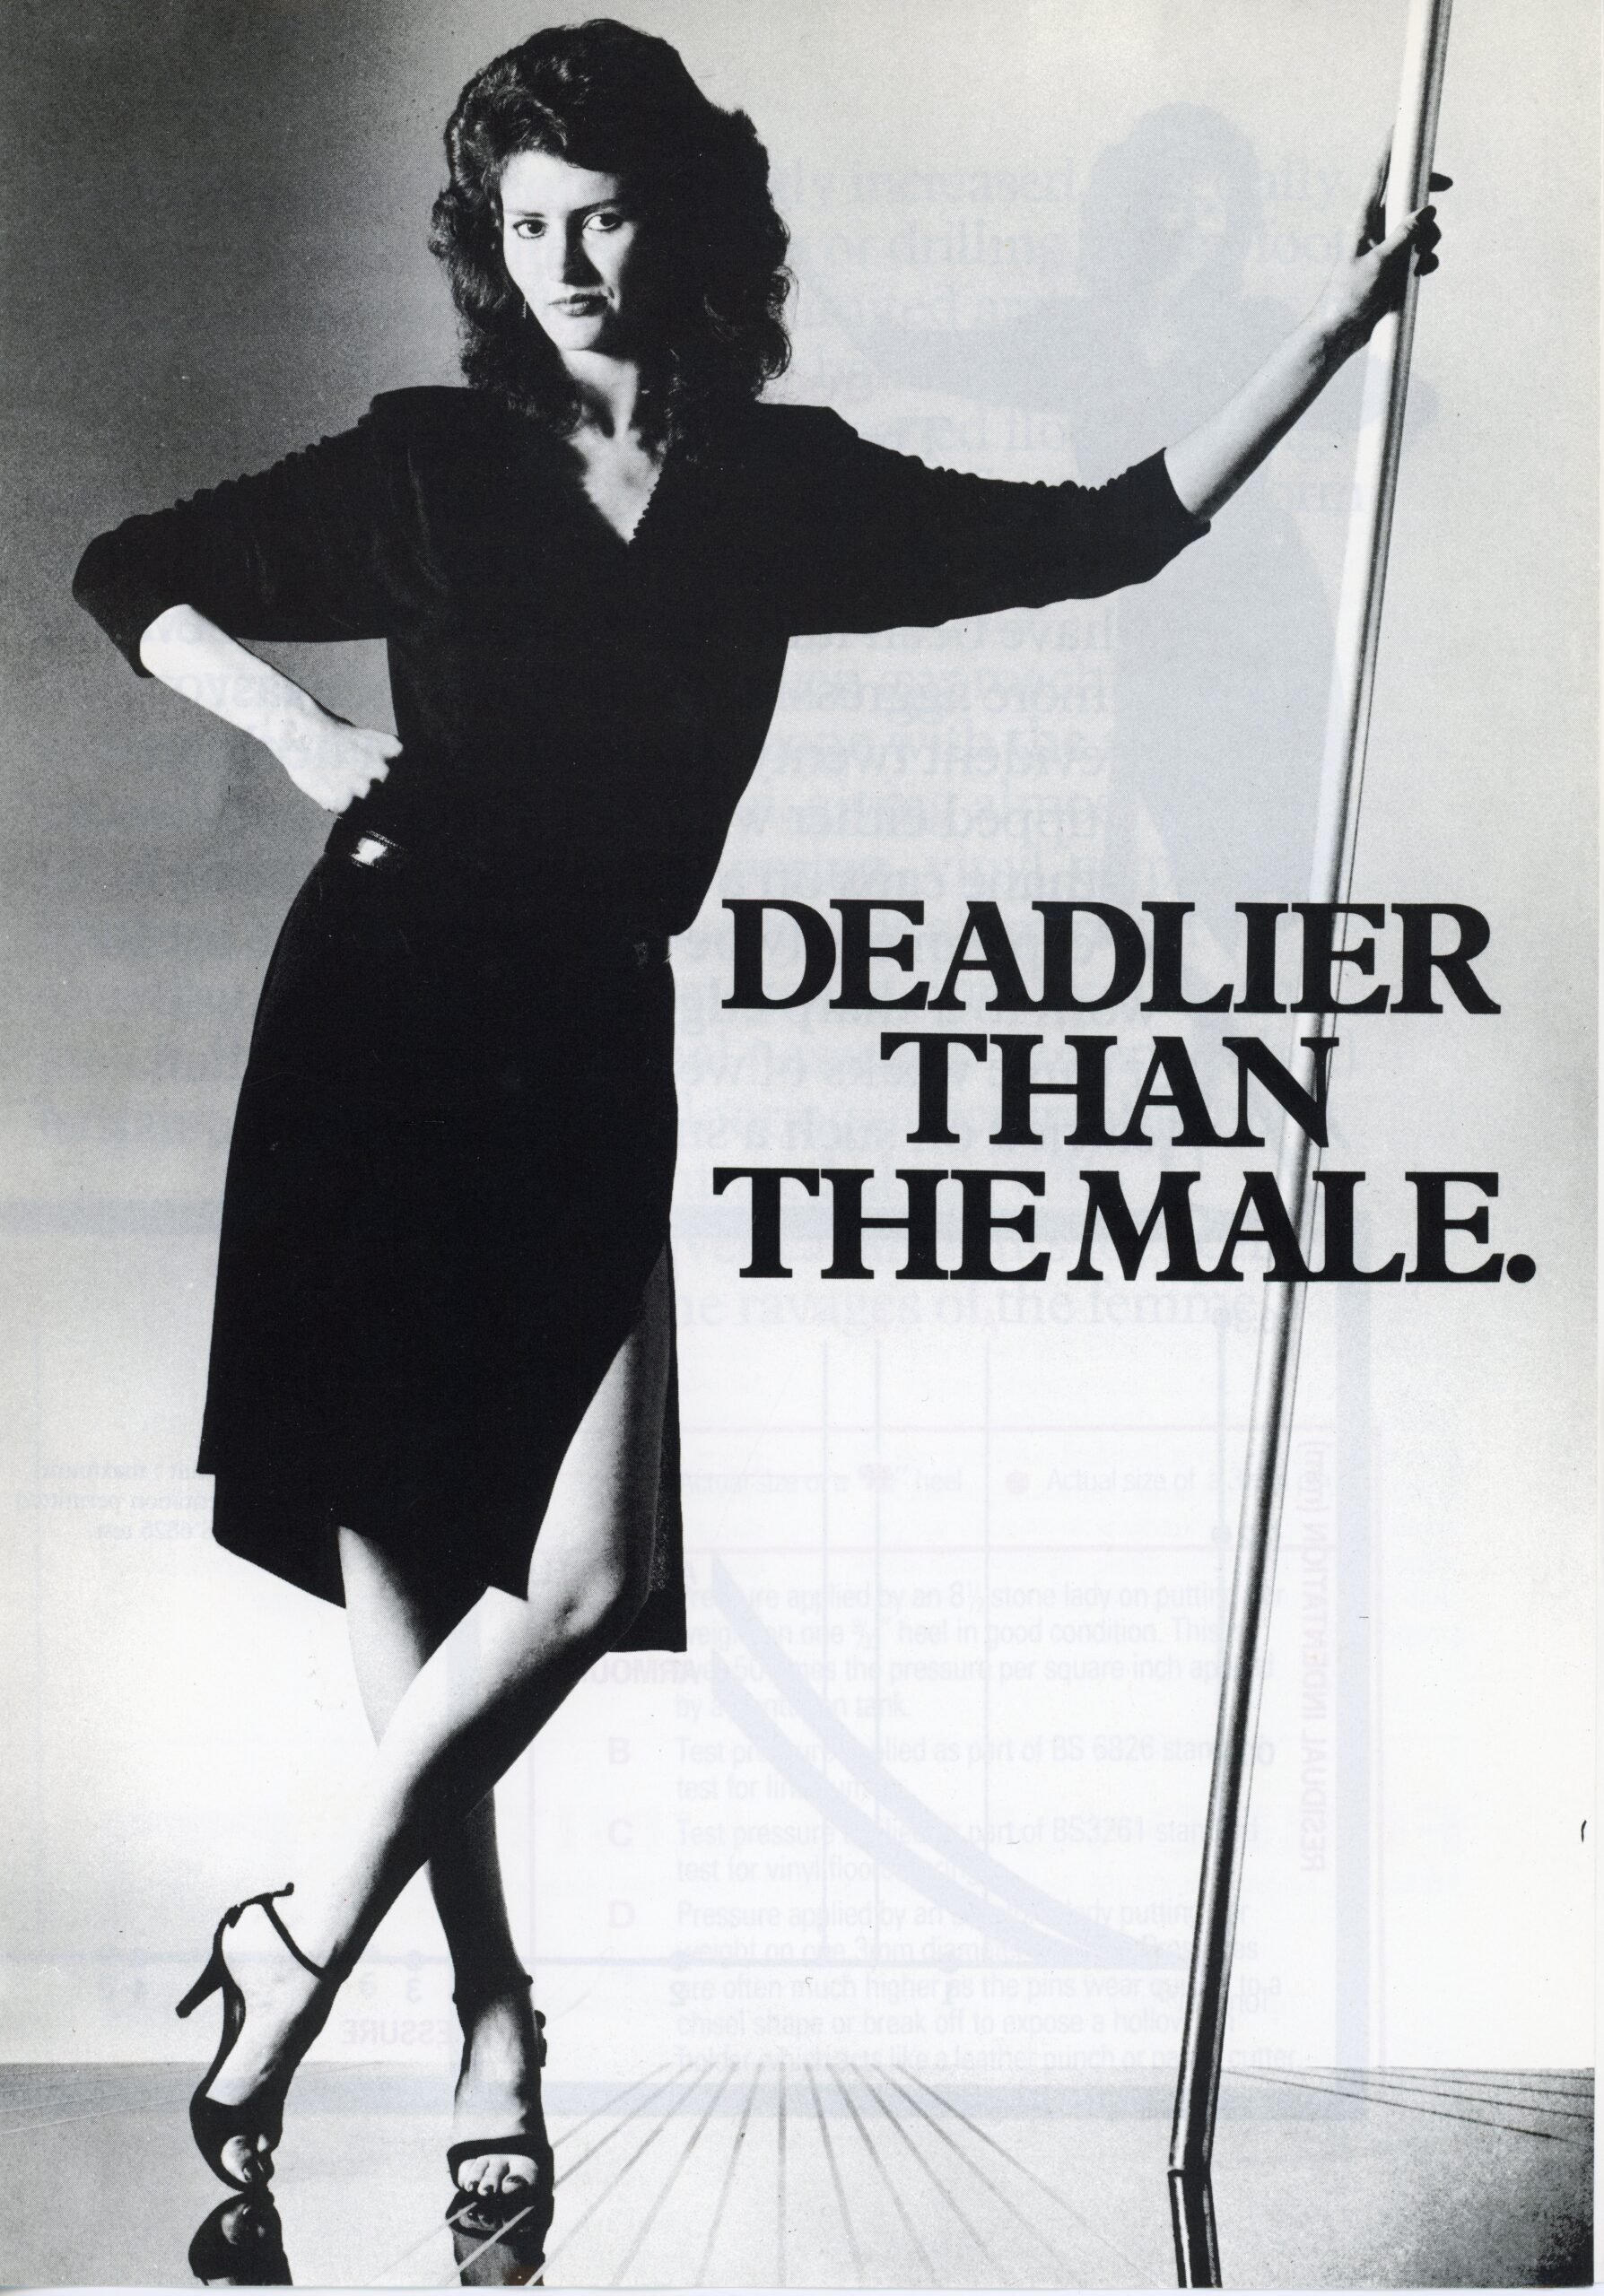 Linoleum flooring advert showing a woman wearing high heels